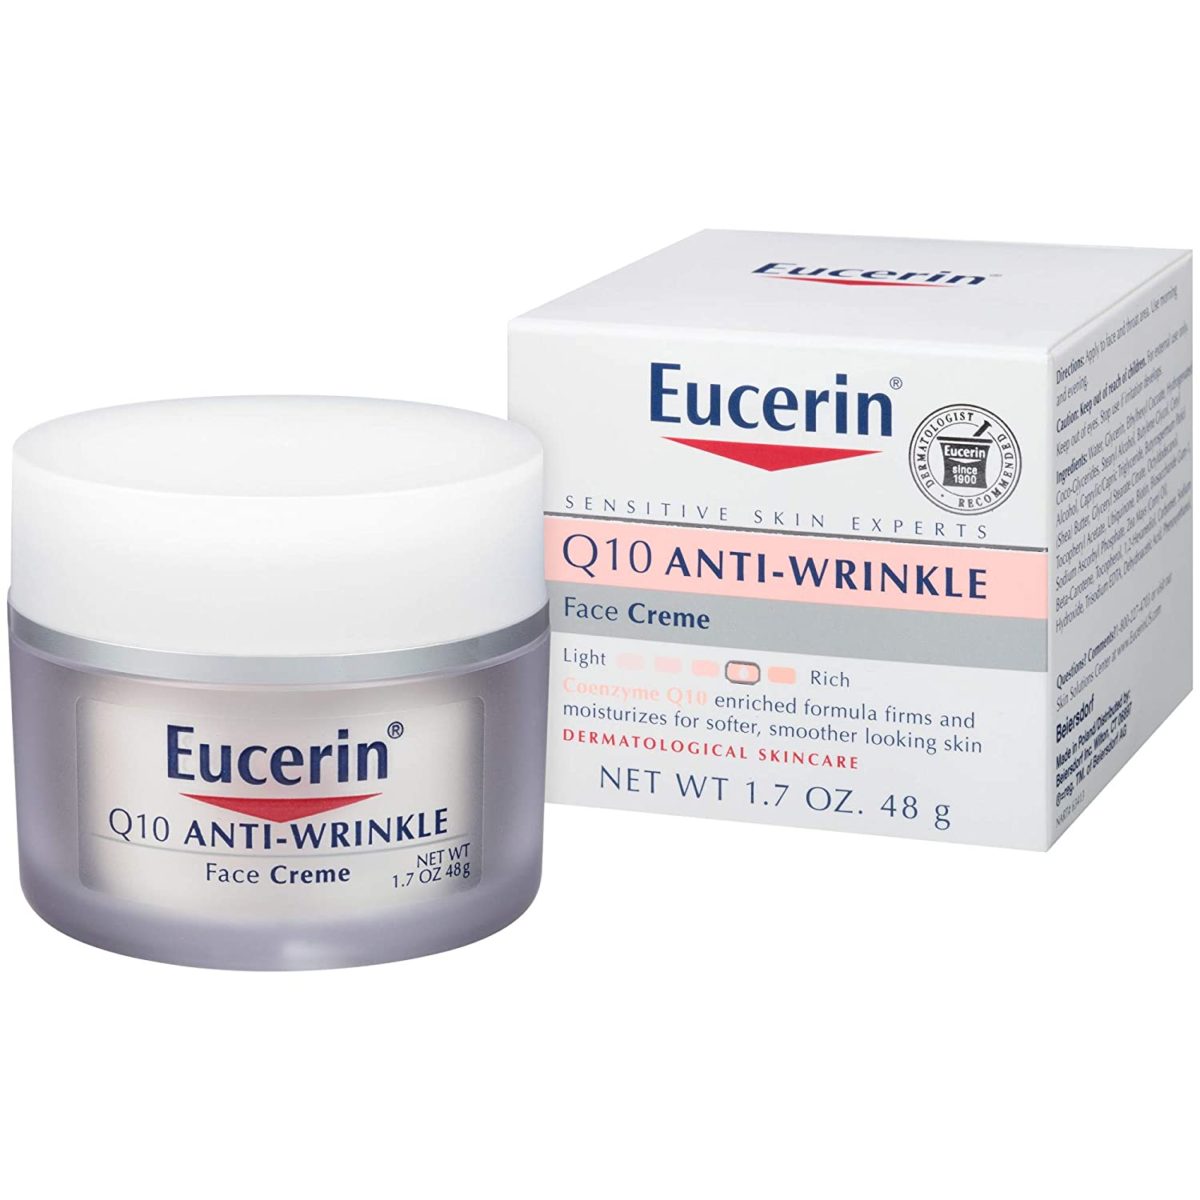 Eucerin Q10 Anti-Wrinkle Face Cream $6.38 or Cheaper